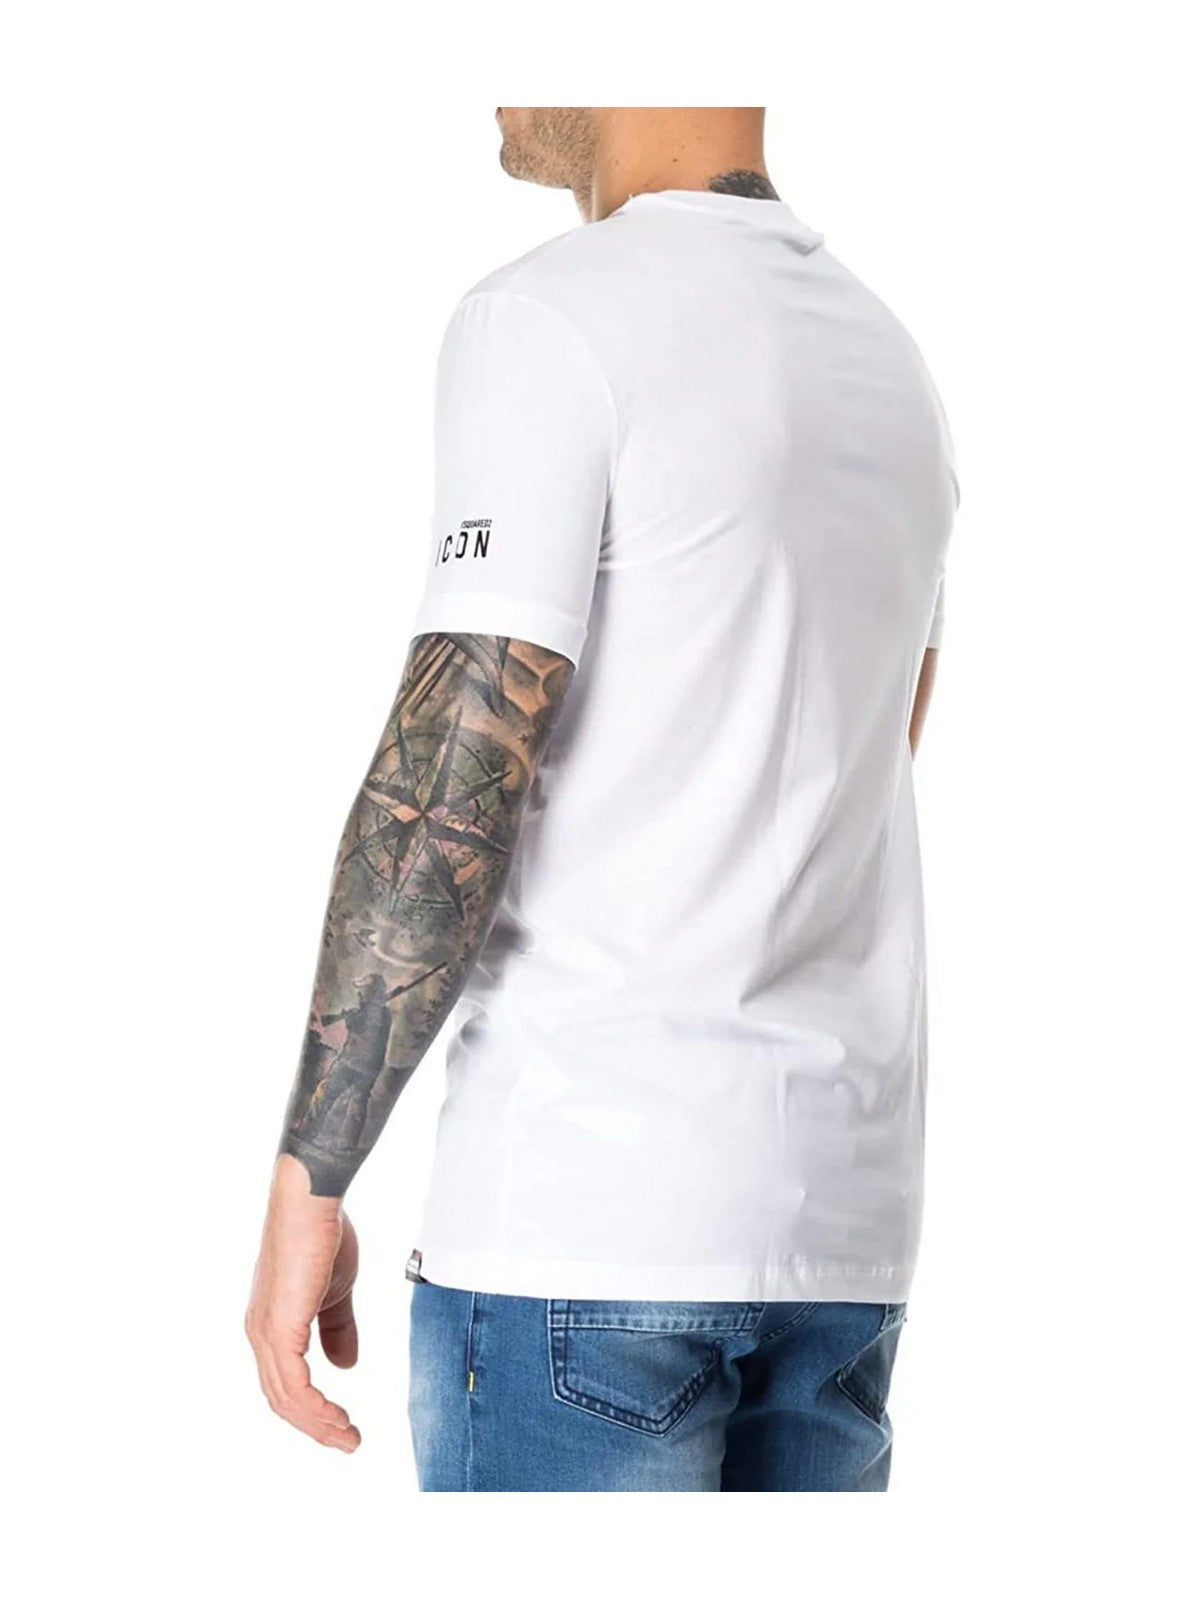 DSQUARED2 T-Shirt e Polo Uomo  D9M20447 100 Bianco